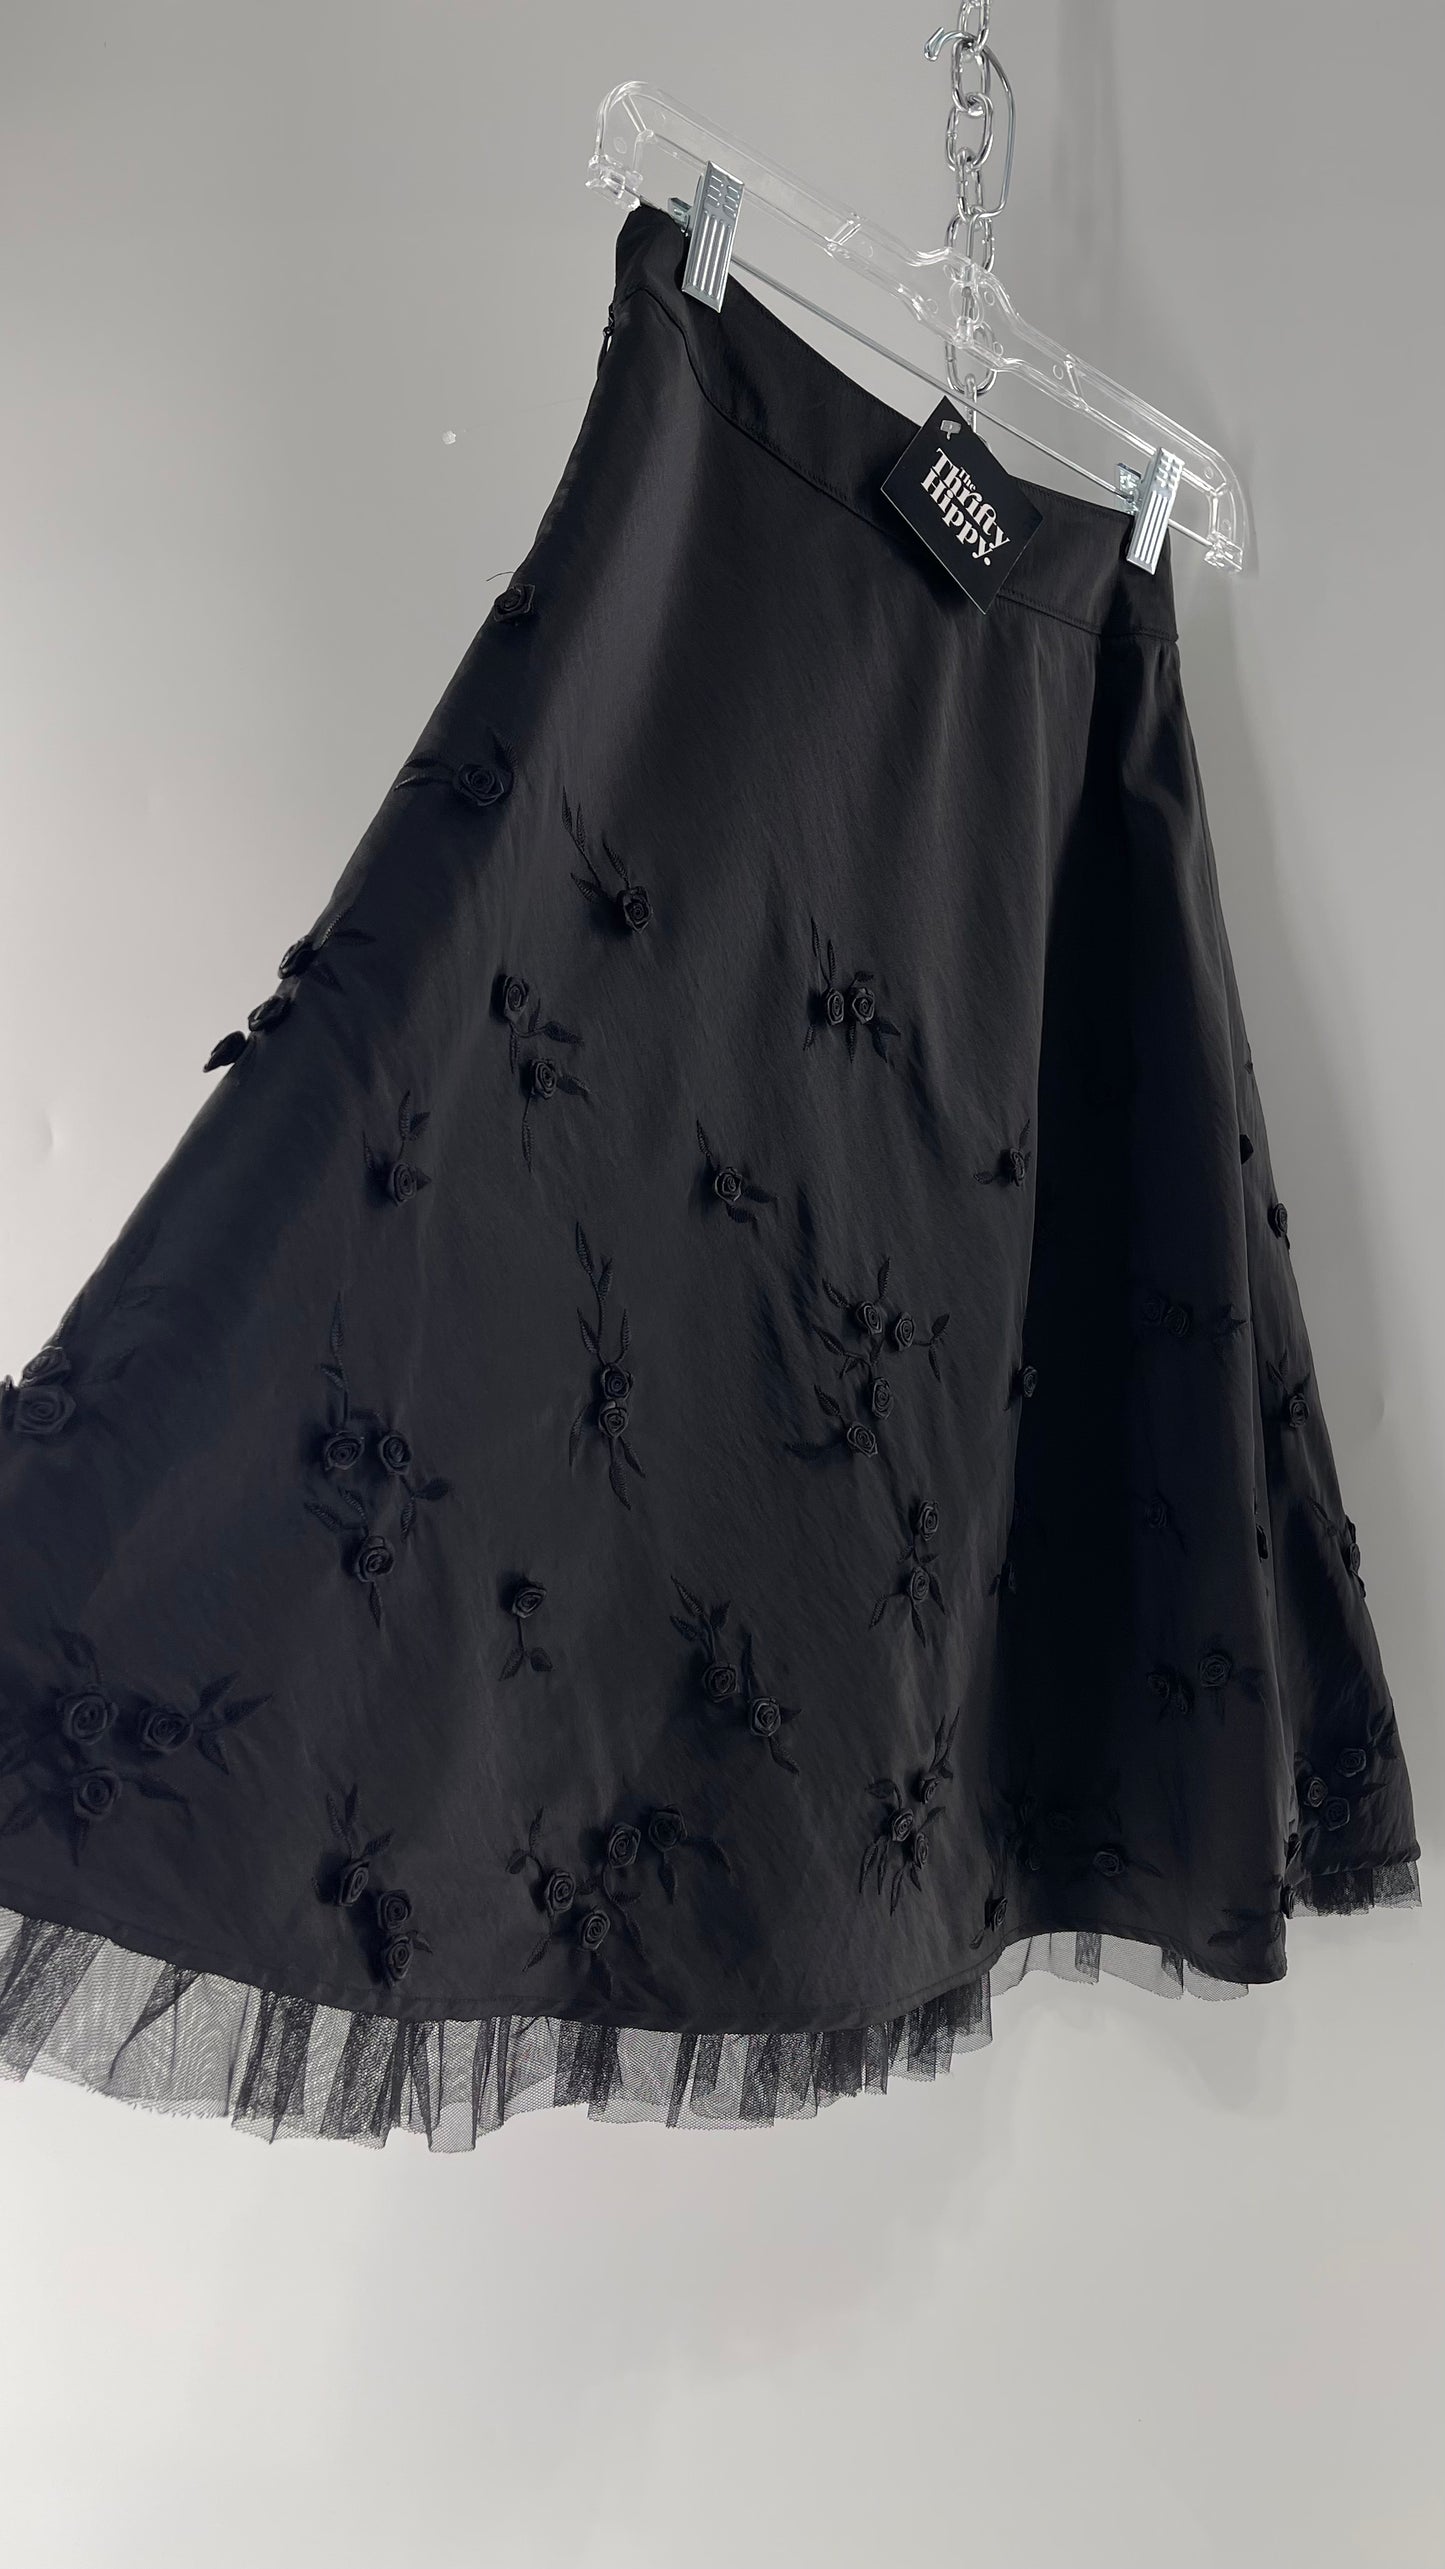 Vintage Josephine Chaus Petite Black Skirt with Rosettes and Mesh Underlay (6P)